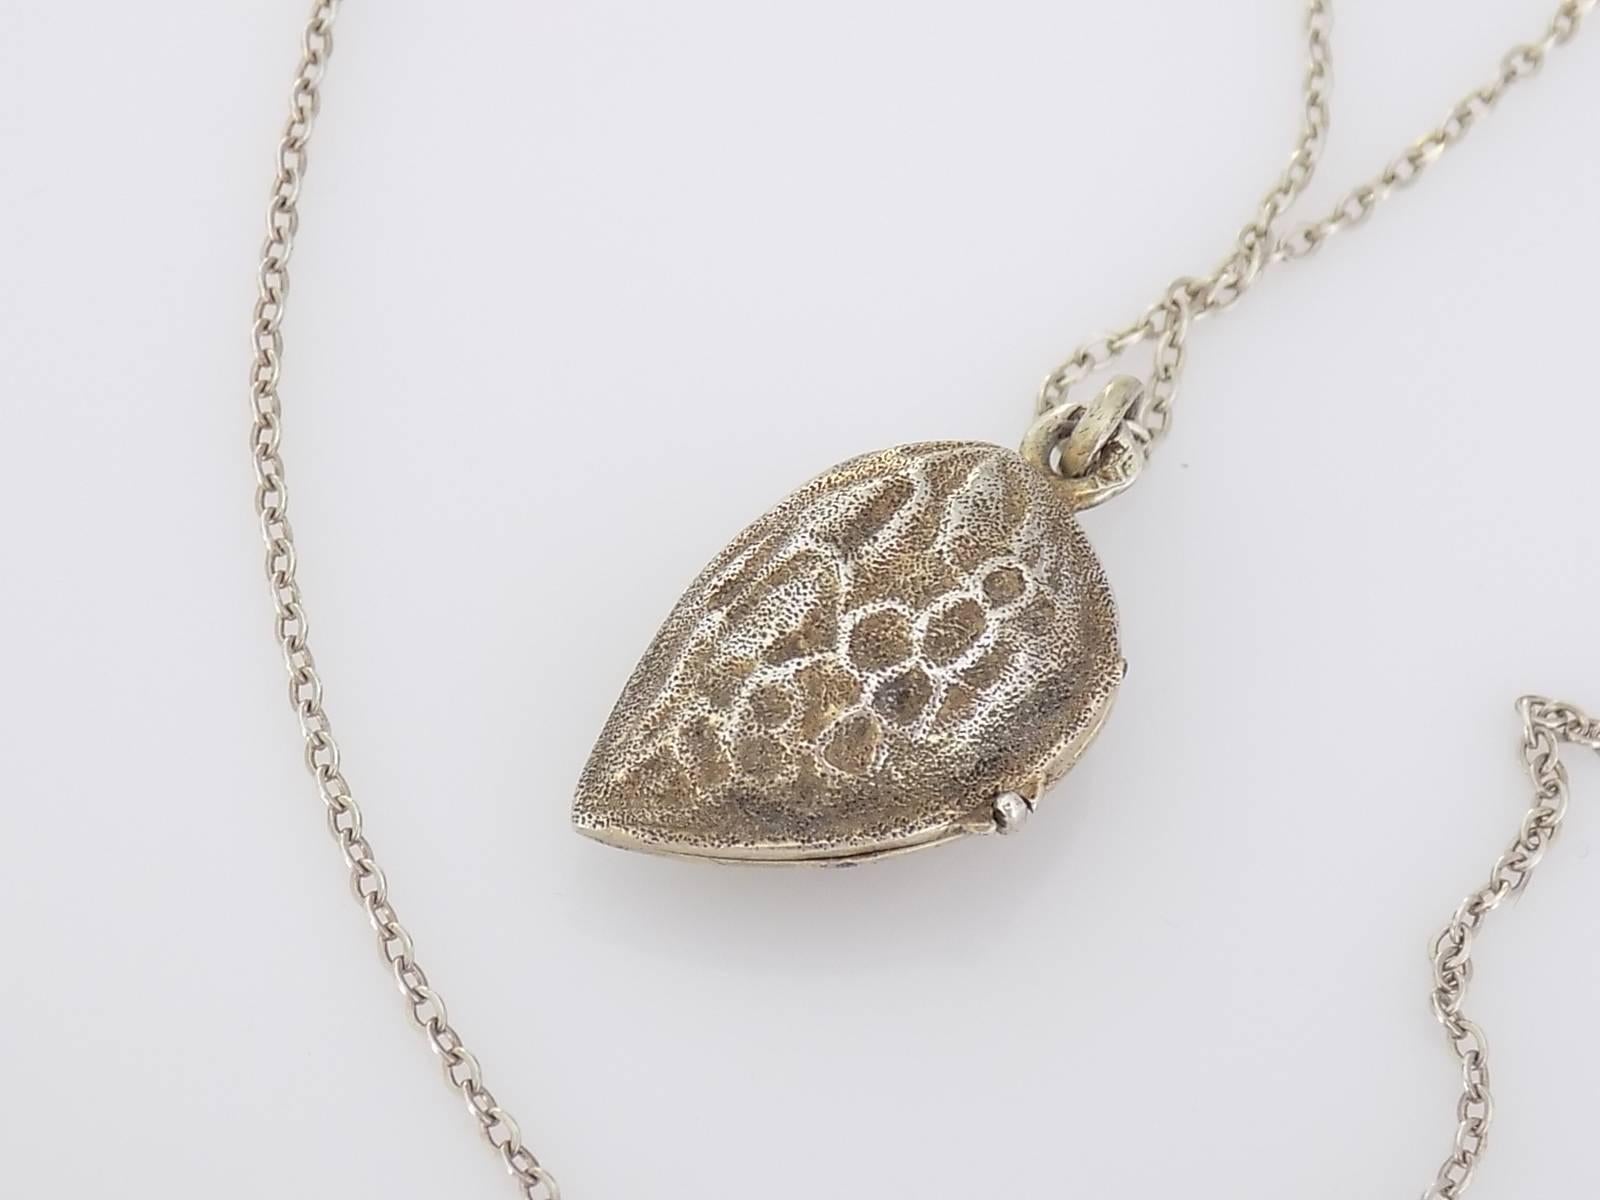 Women's Antique Victorian Silver Almond Locket Pendant on Silver Chain Necklace